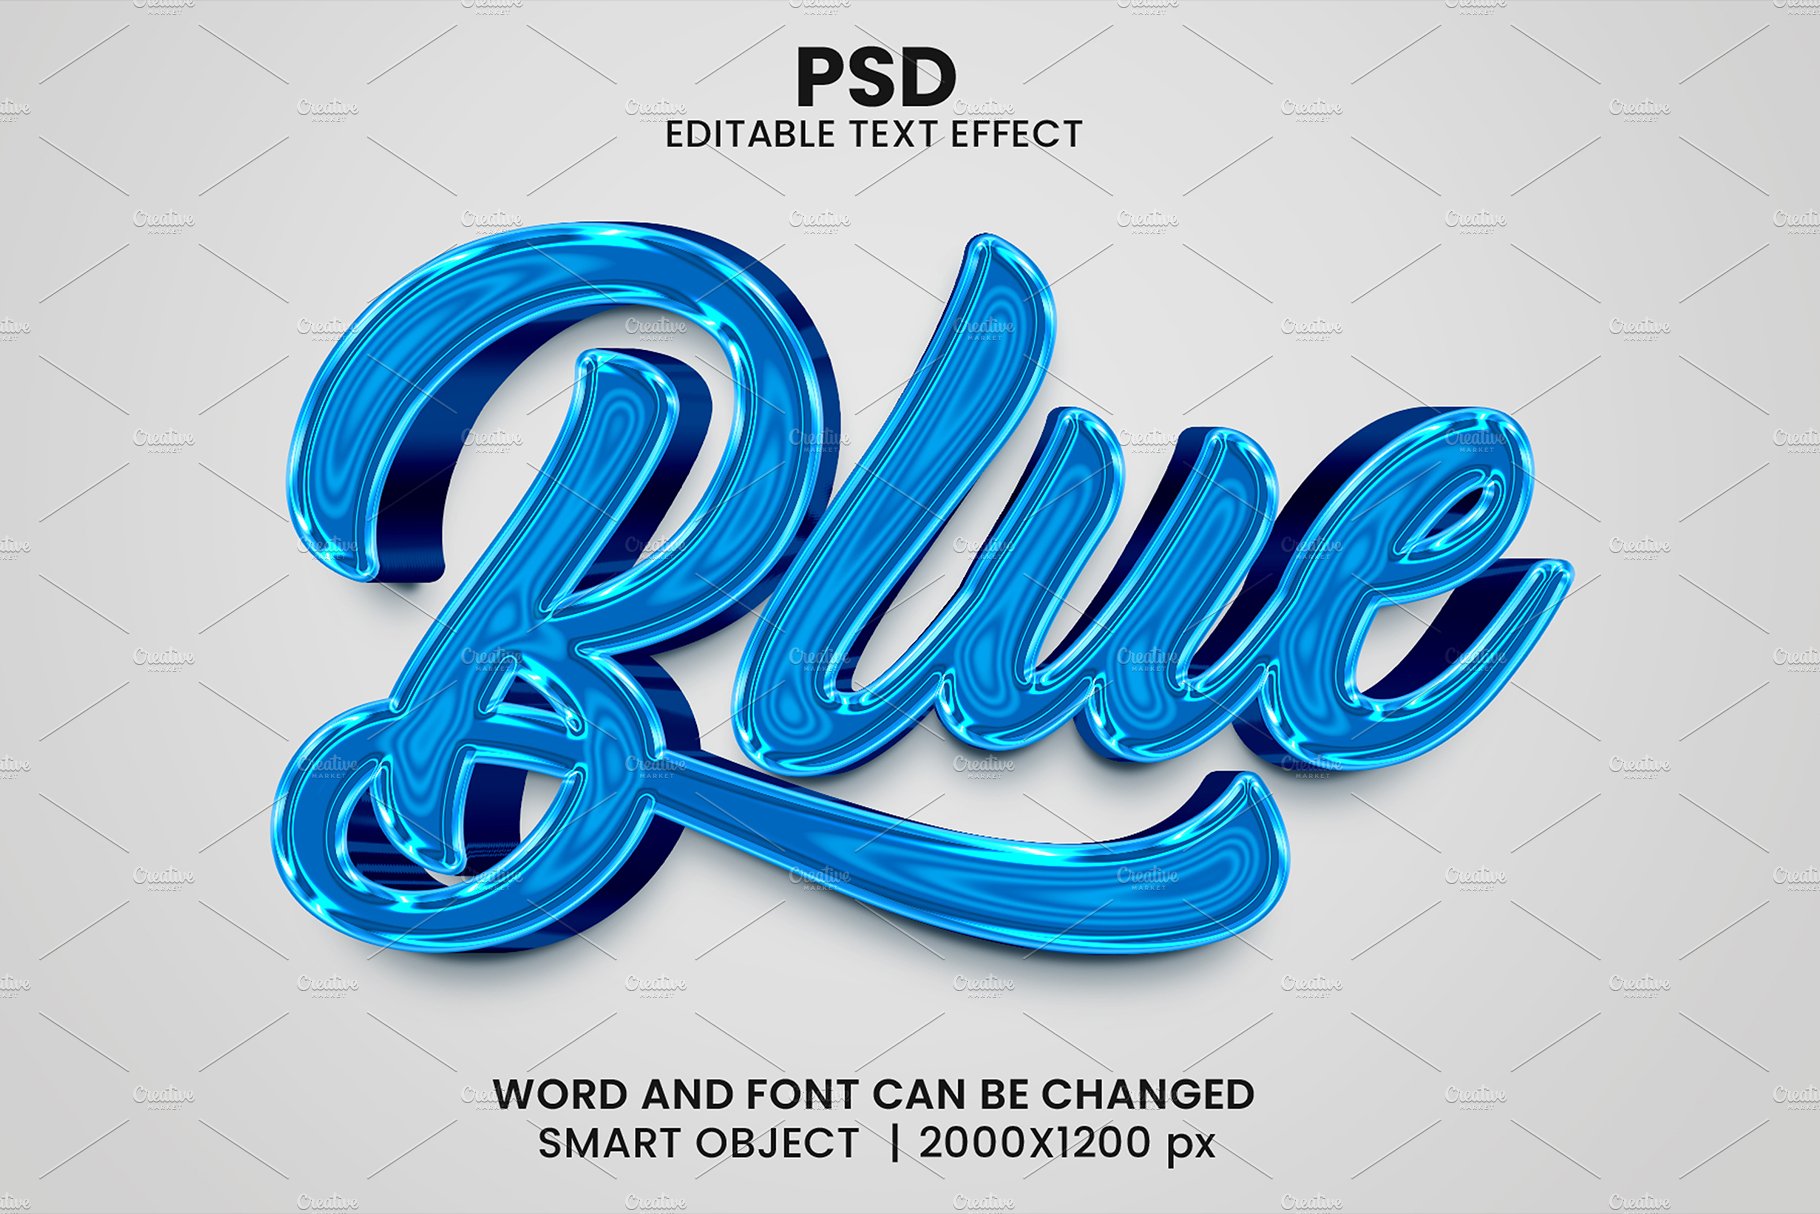 Blue 3d Editable Psd Text Effectcover image.